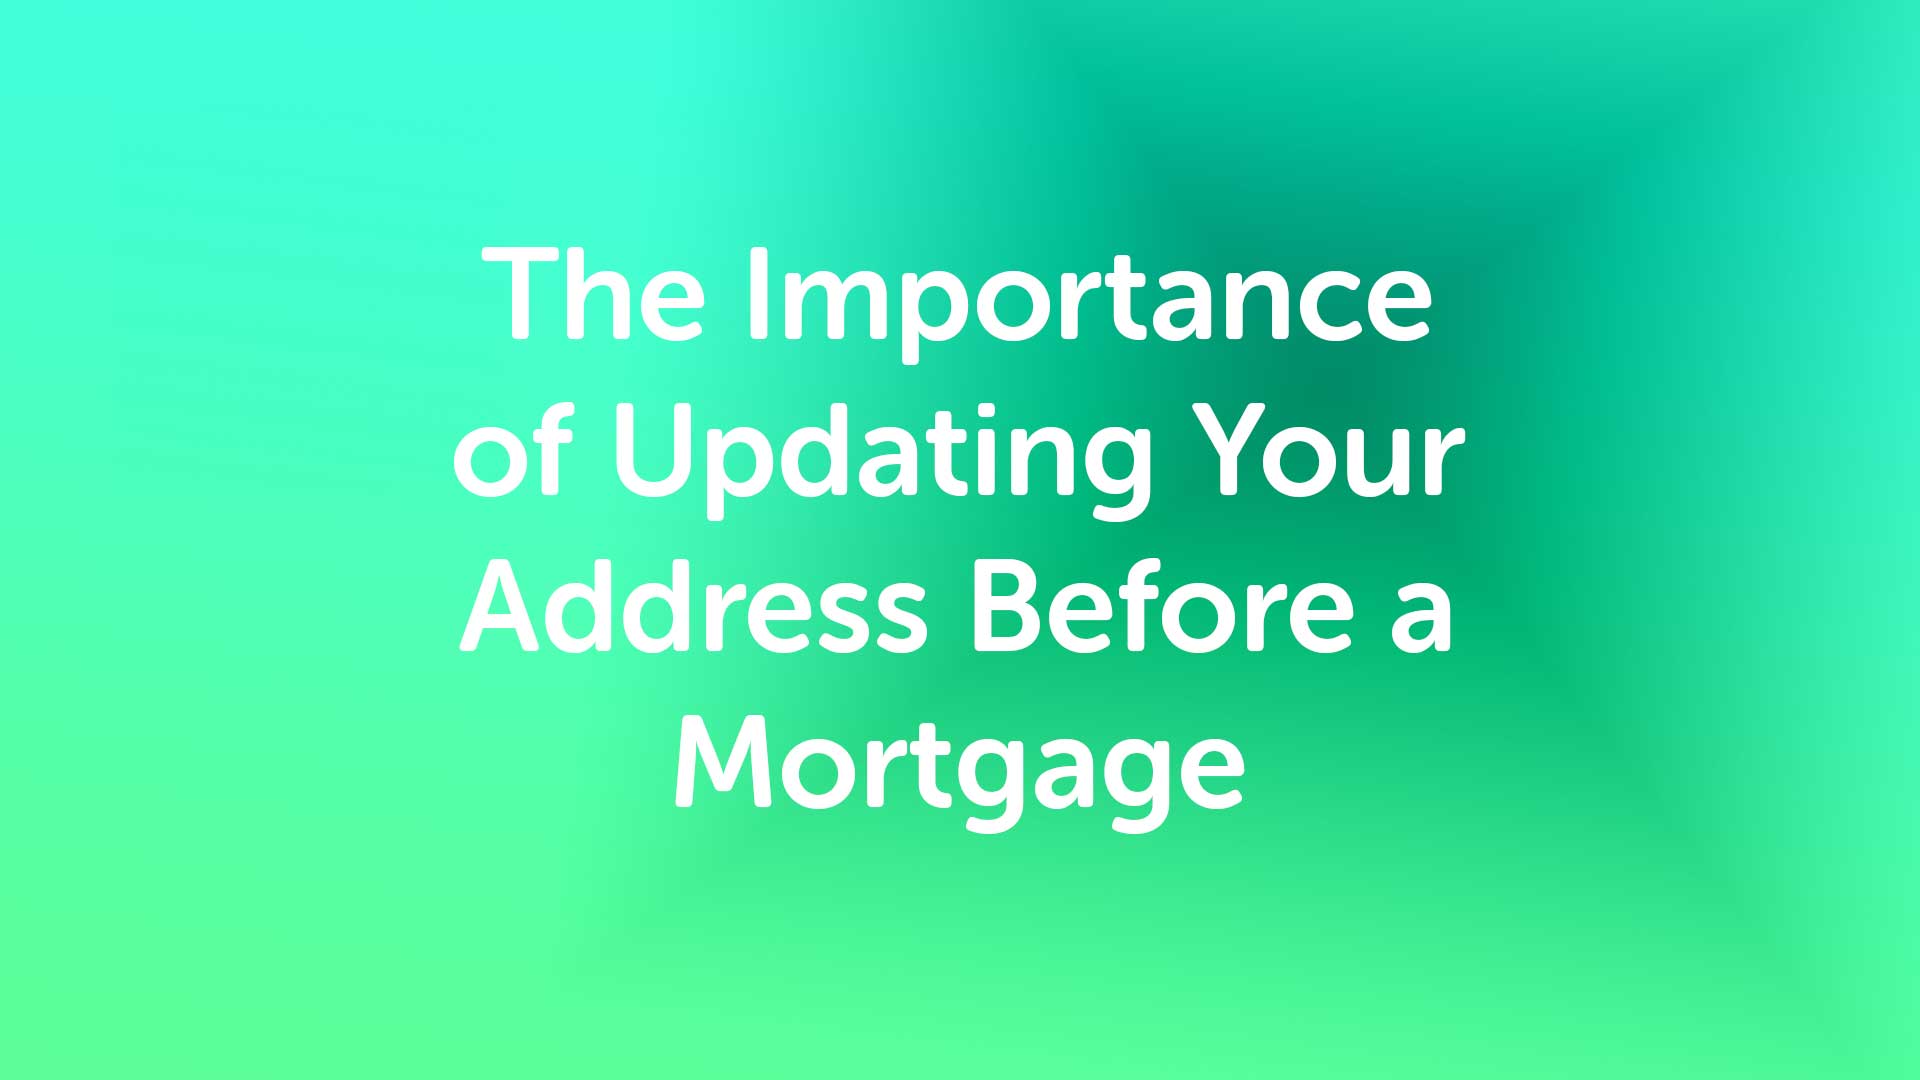 Updating Address Before Mortgage | Londonmoneyman